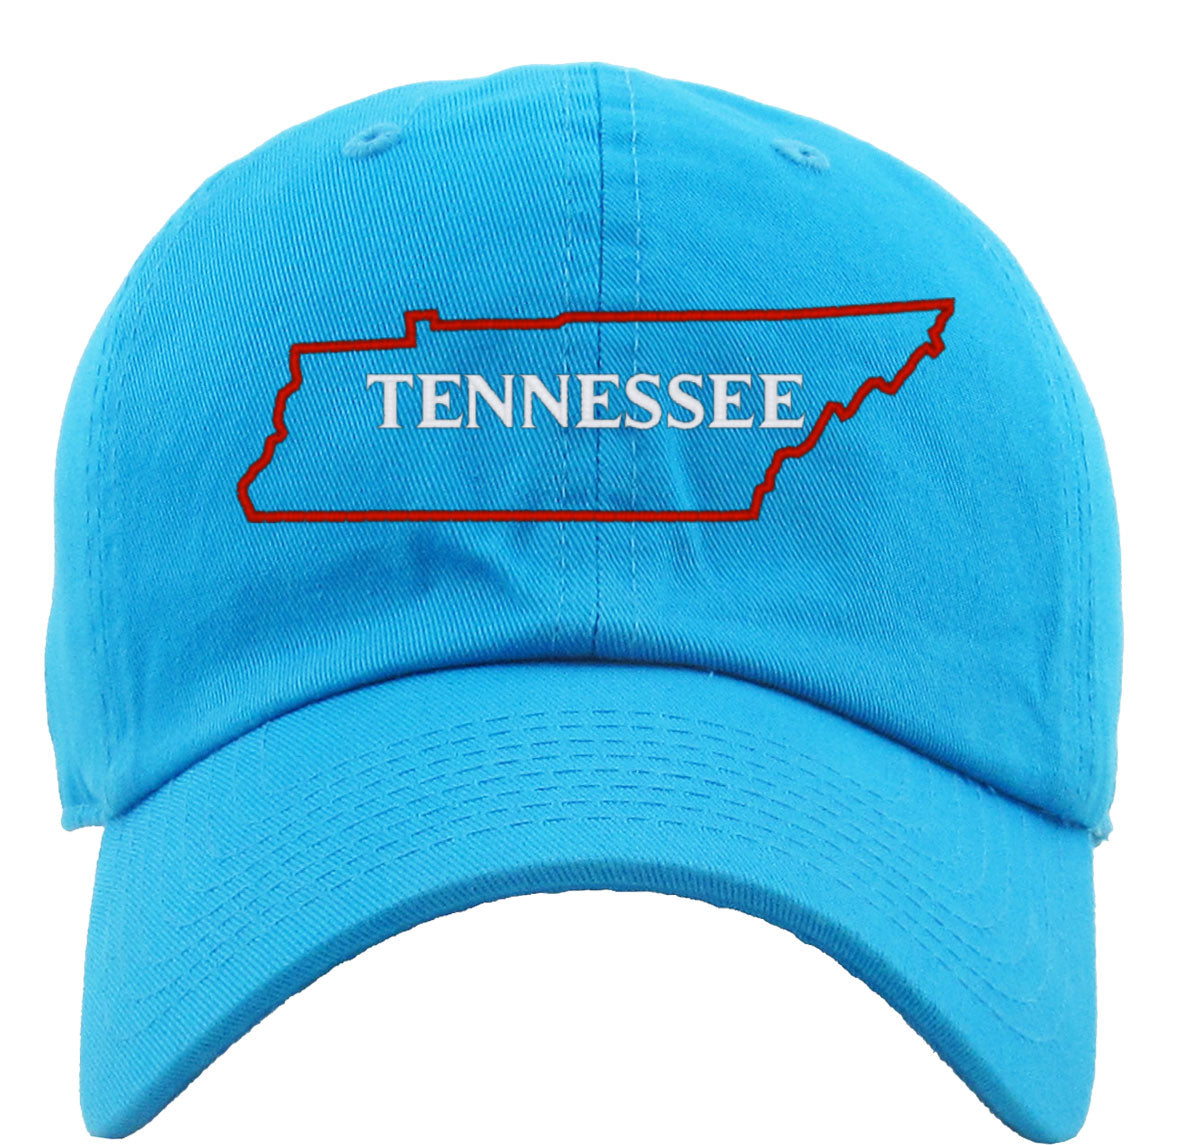 Tennessee Premium Baseball Cap